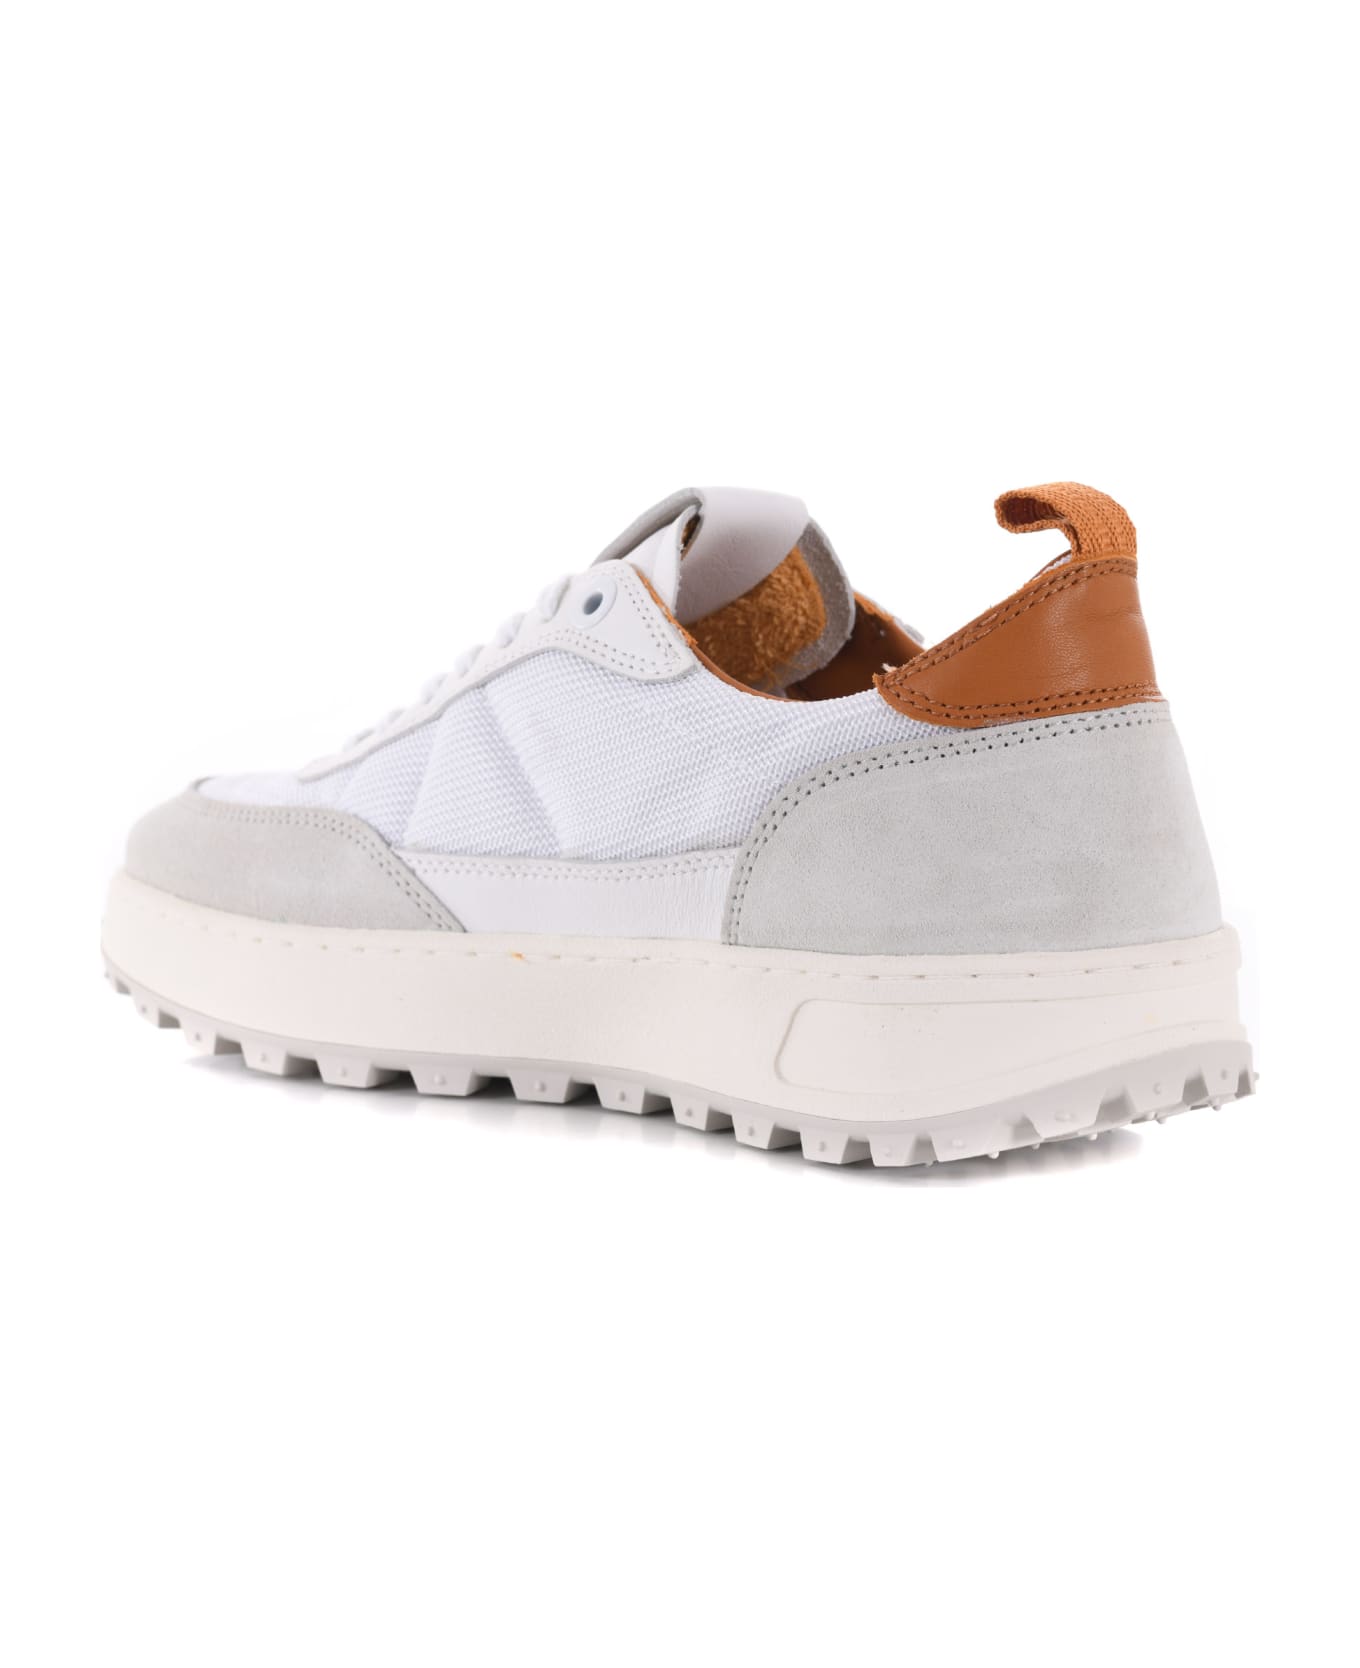 D.A.T.E. Sneakers "kdue Colored" In Suede And Nylon Mesh - Bianco/arancio